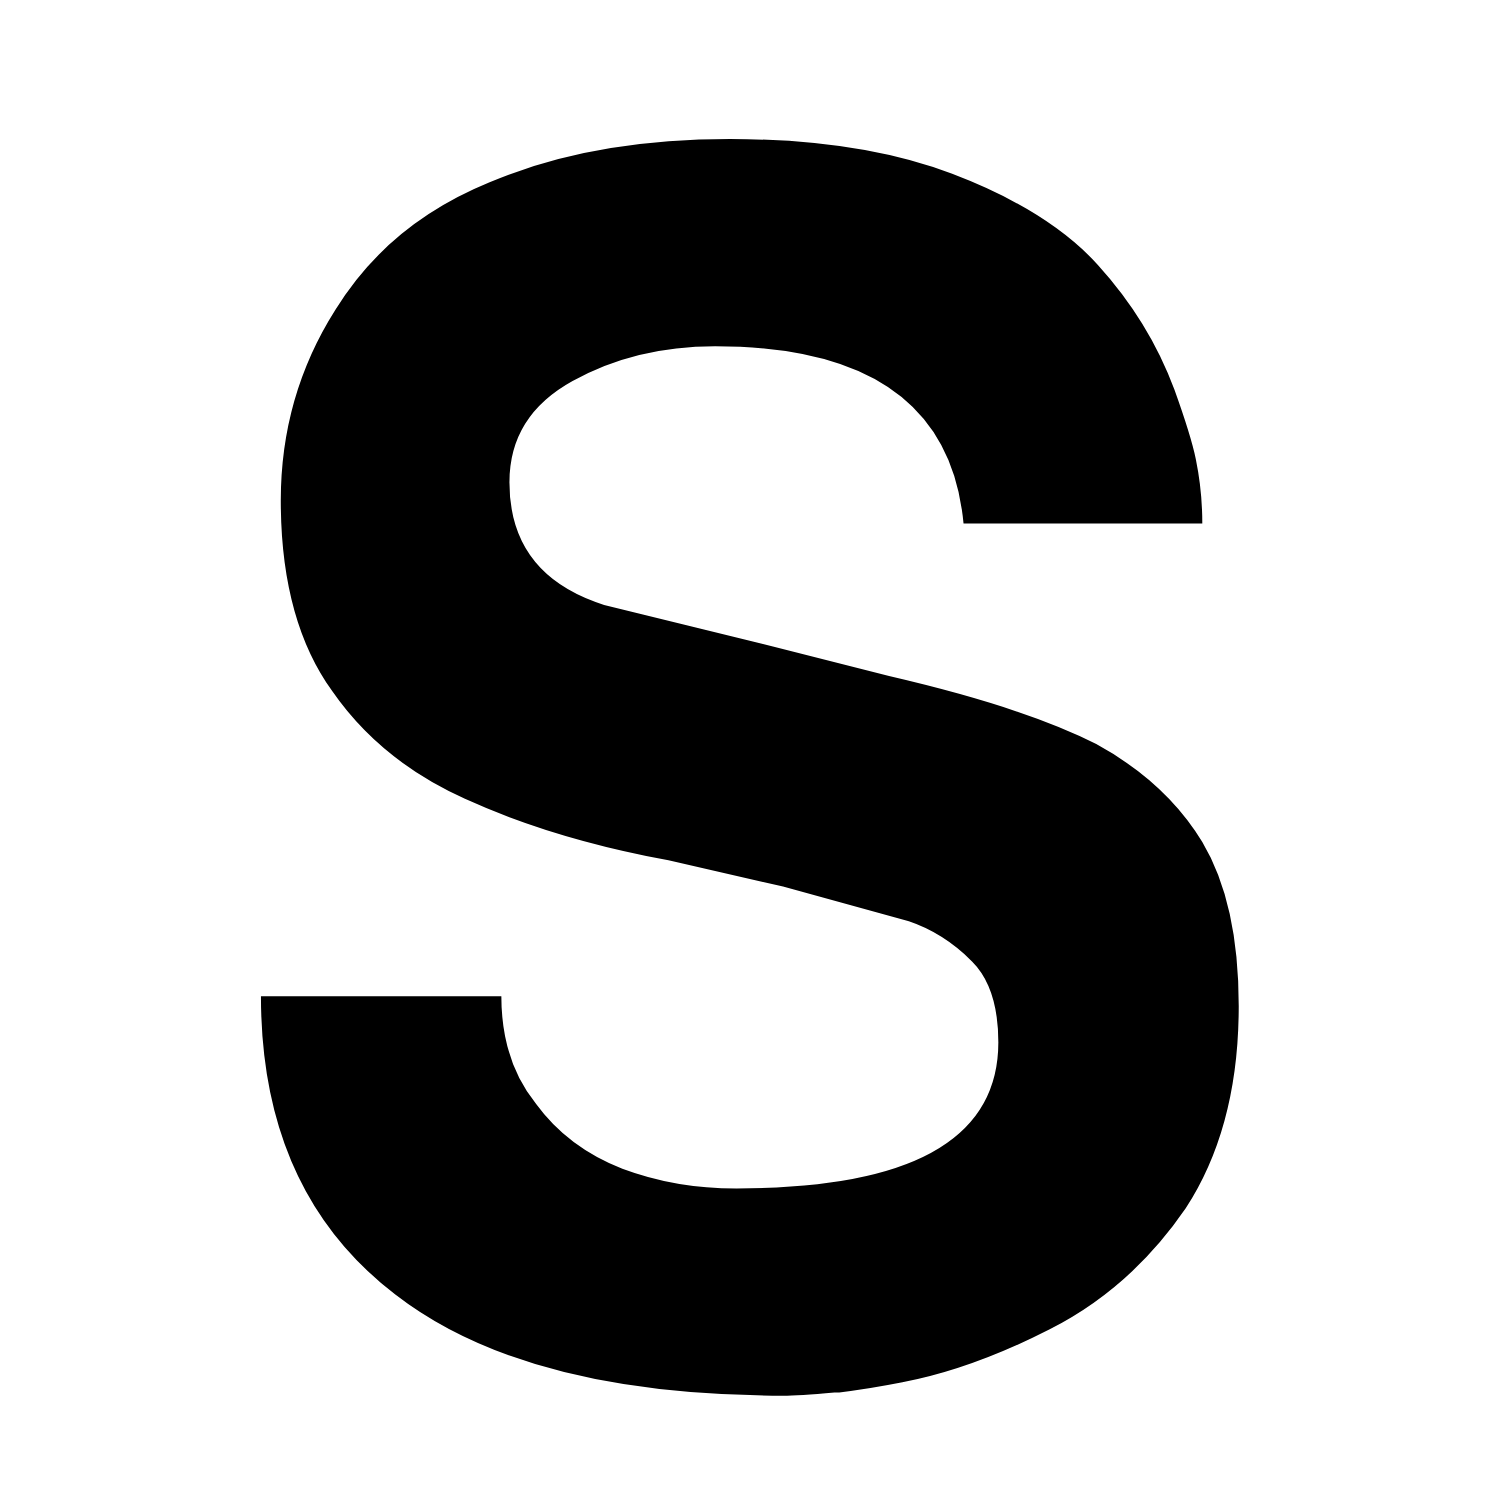 S. Большая буква s. Значок s. Символ доллара. Английская буква s.